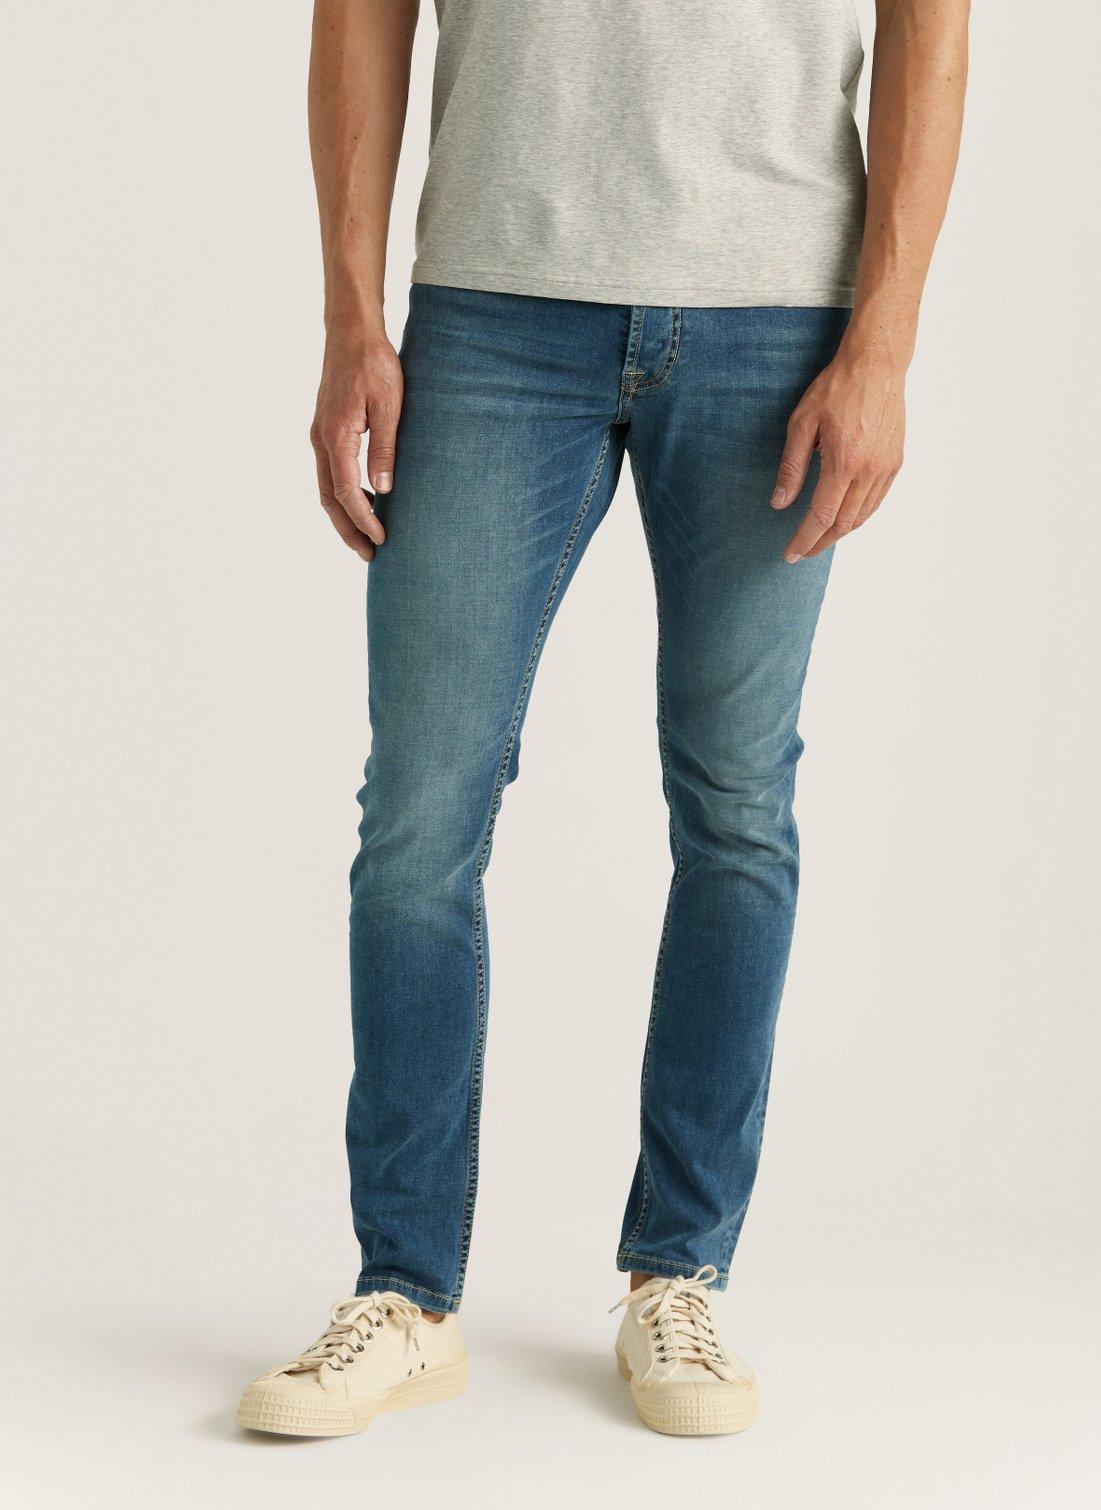 Steve Satin Jeans